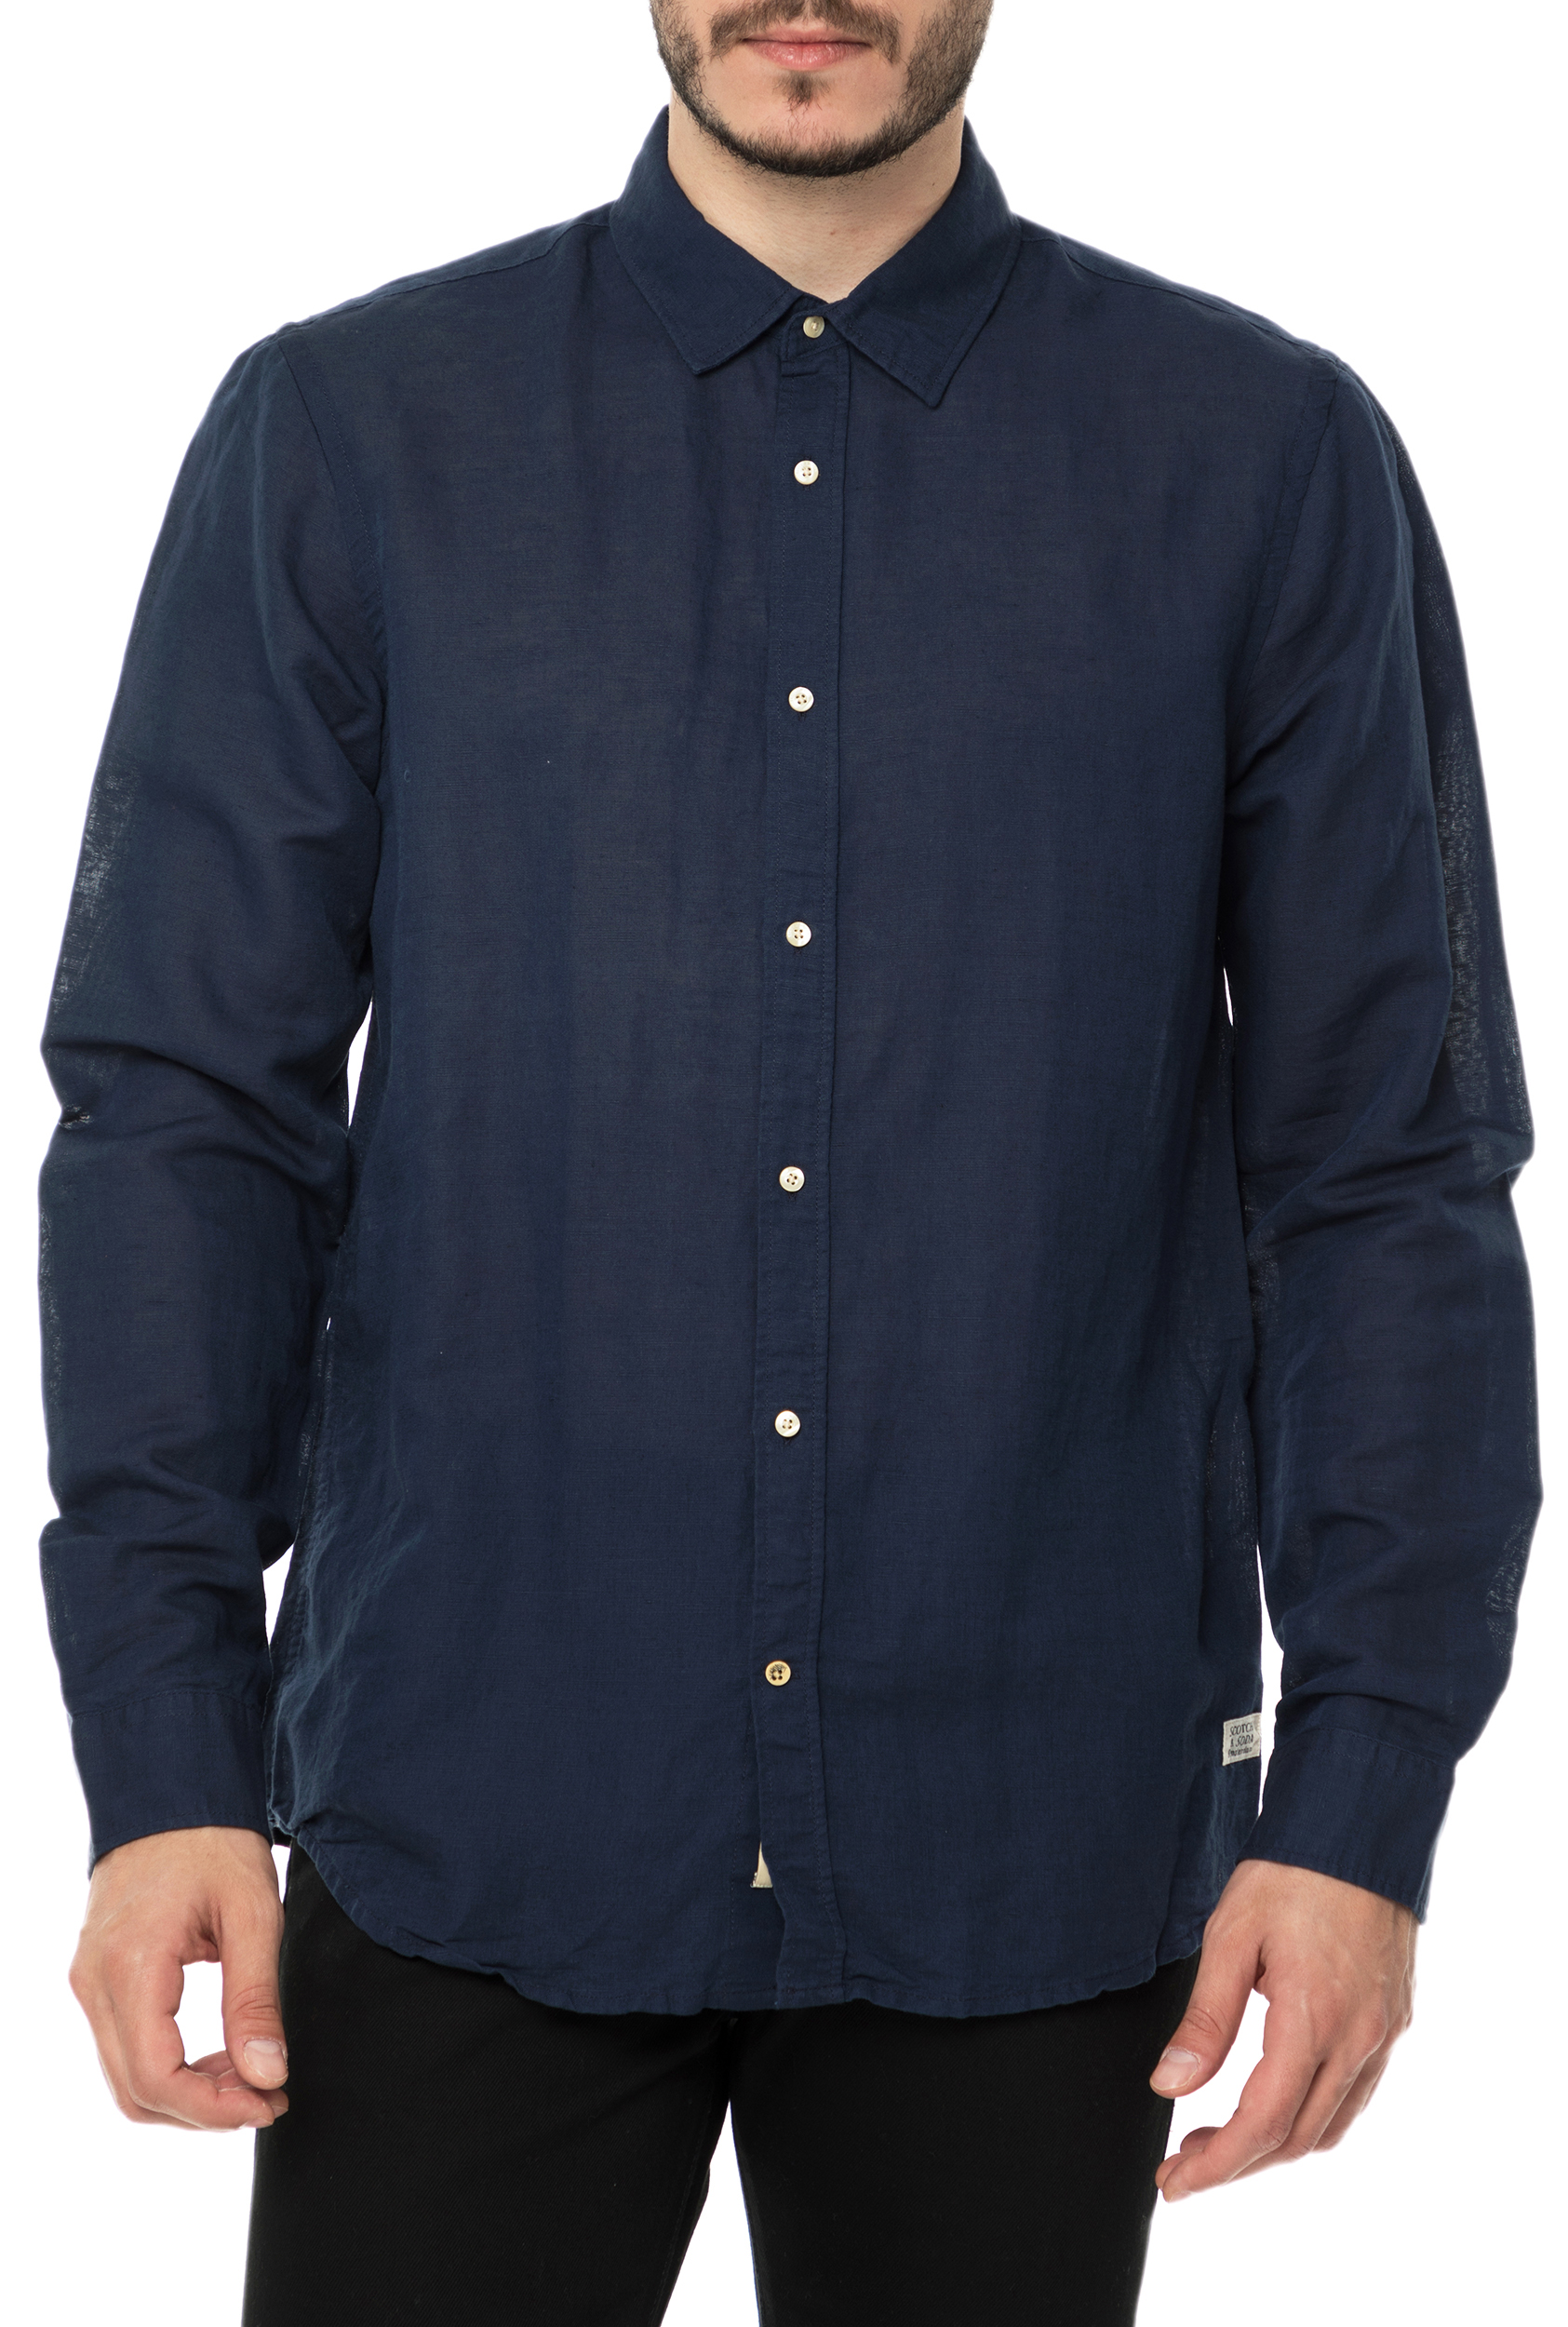 SCOTCH & SODA - Ανδρικό μακρυμάνικο πουκάμισο SCOTCH & SODA μπλε Ανδρικά/Ρούχα/Πουκάμισα/Μακρυμάνικα